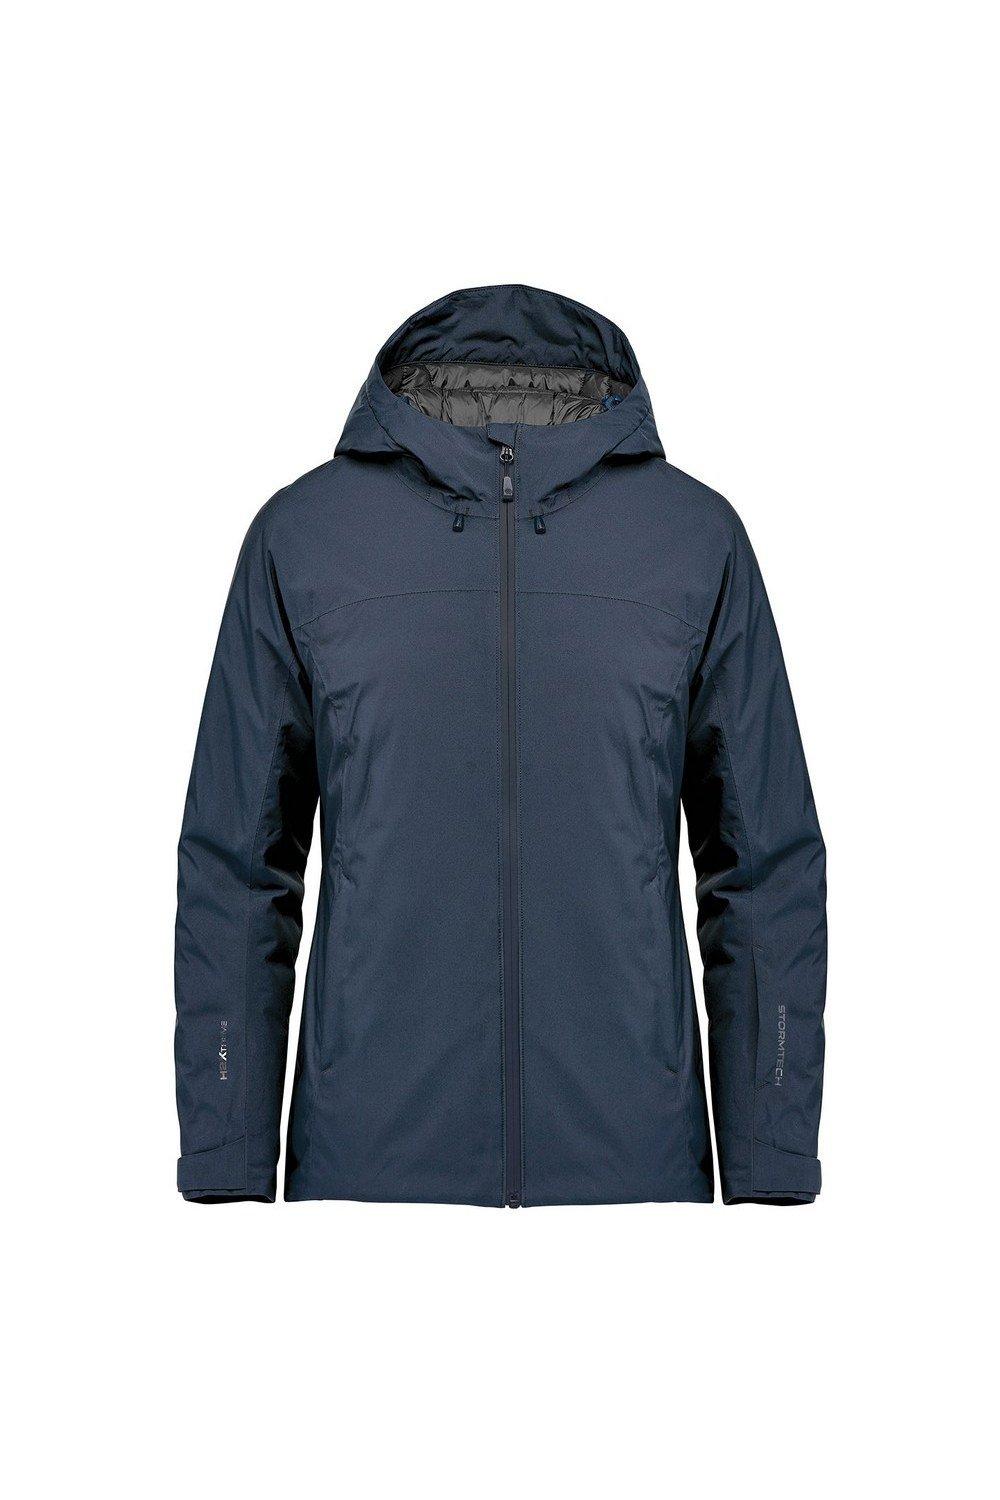 Куртка Nostromo Soft Shell Stormtech, темно-синий куртка nostromo thermal soft shell stormtech серый